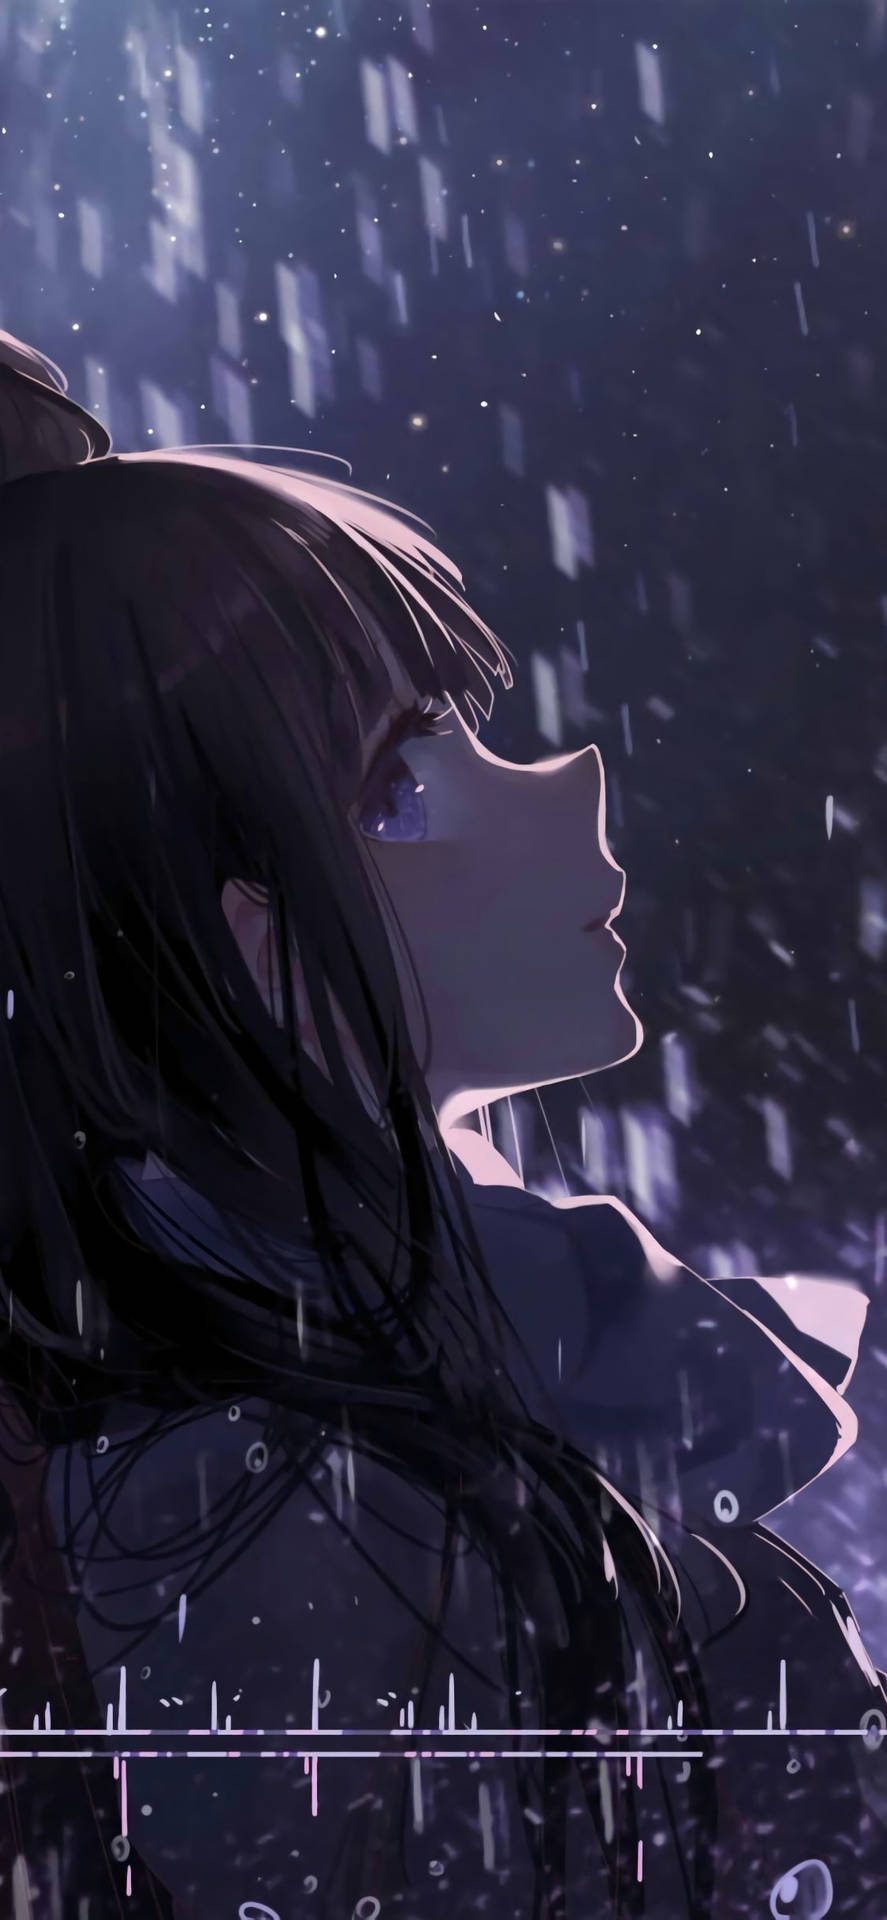 Sad Anime Girl Pouring Rain Background